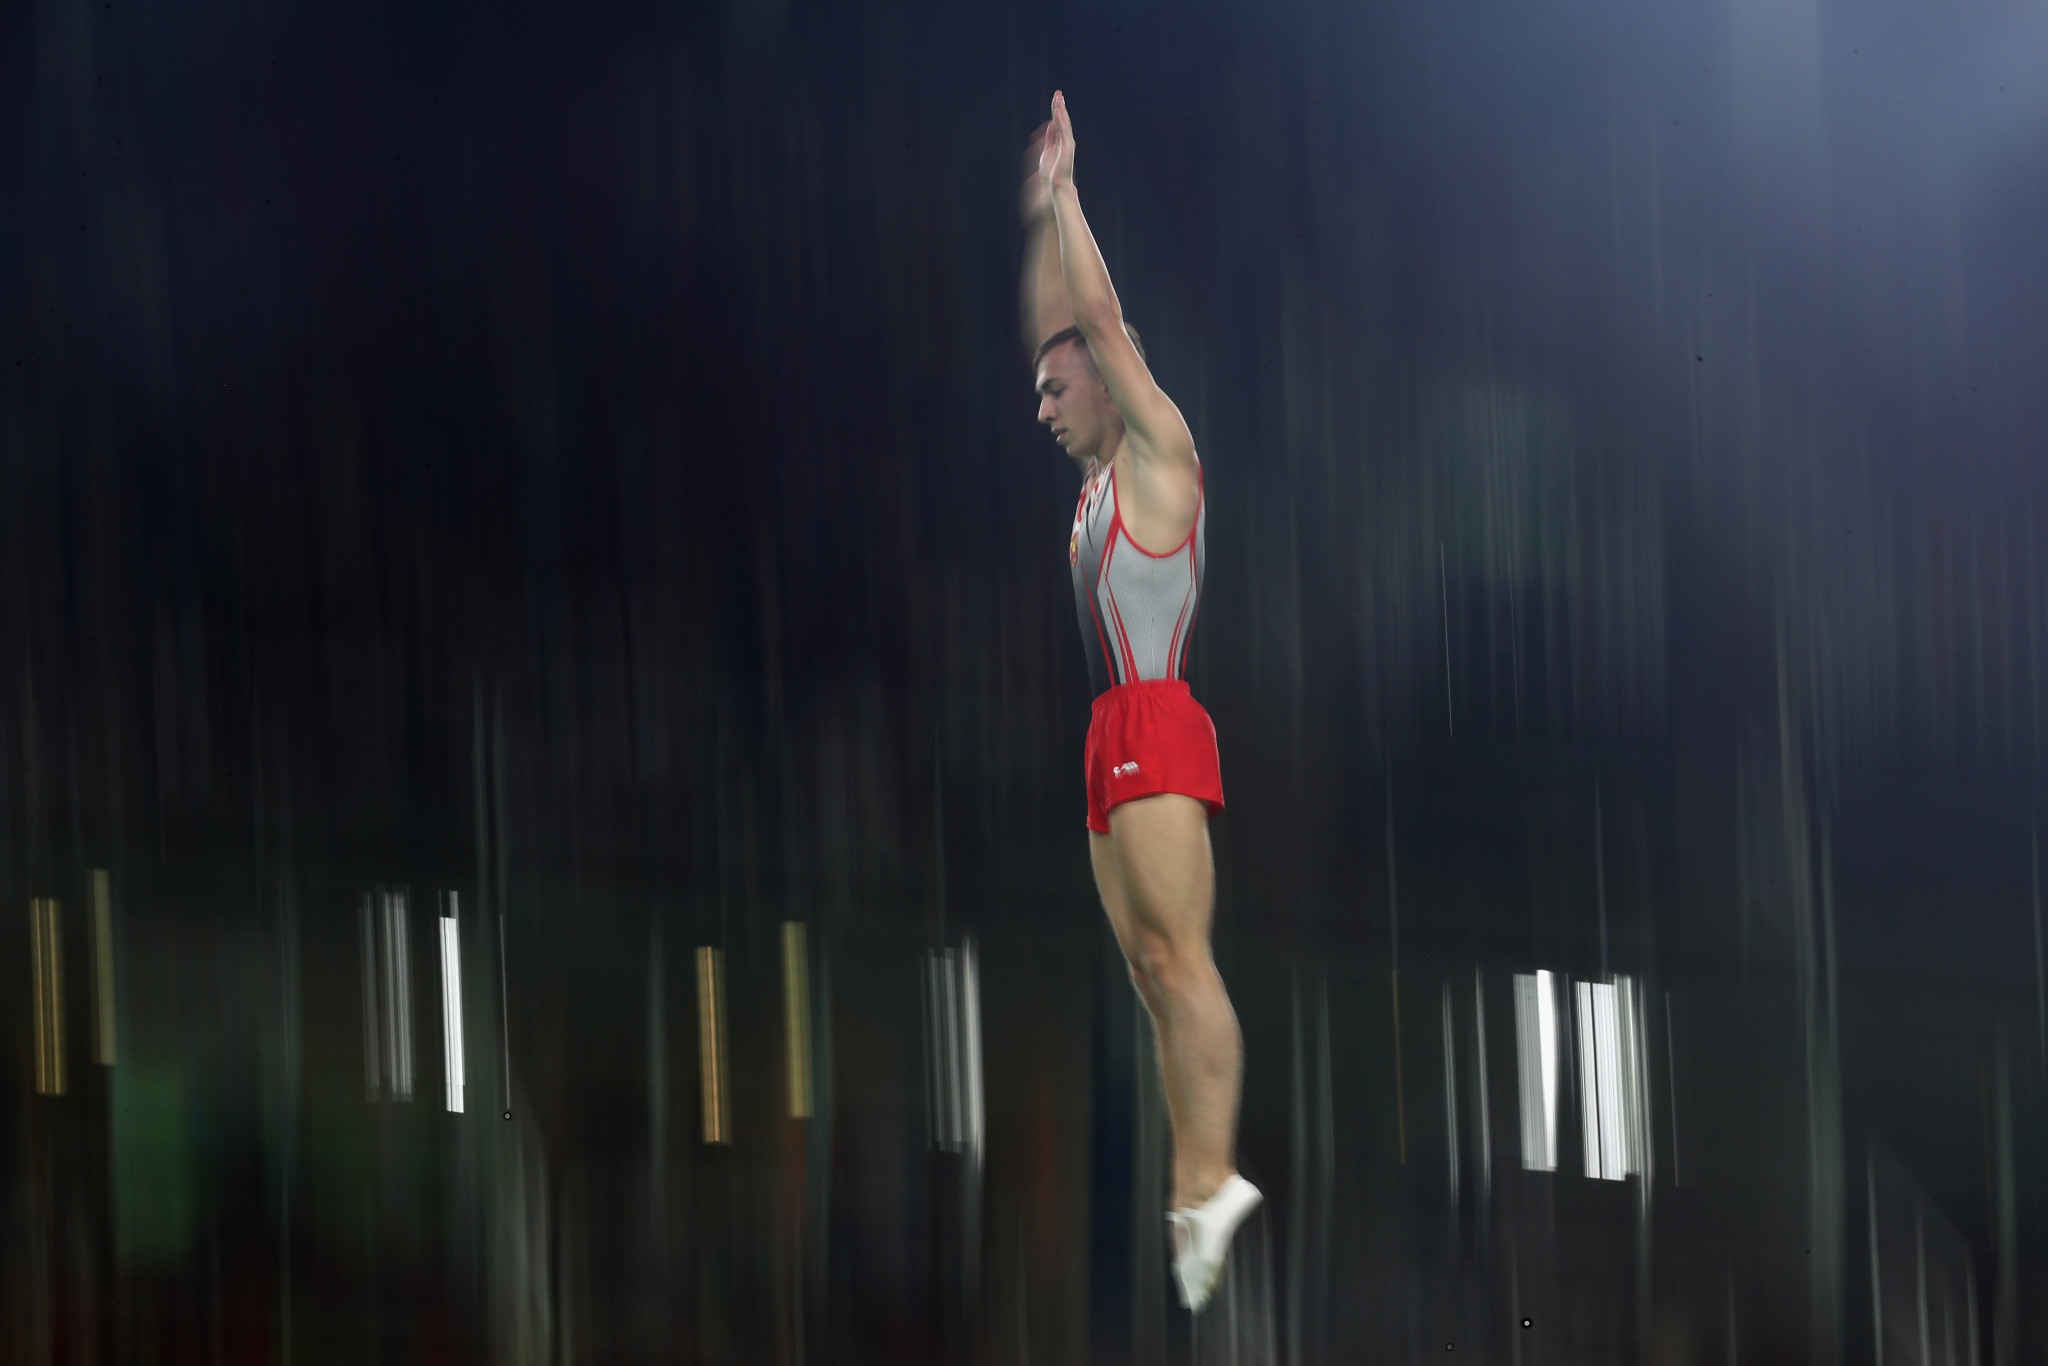 Gymnast Uladzislau Hancharou will headline the Belarusian team at the Minsk 2019 European Games ©Getty Images